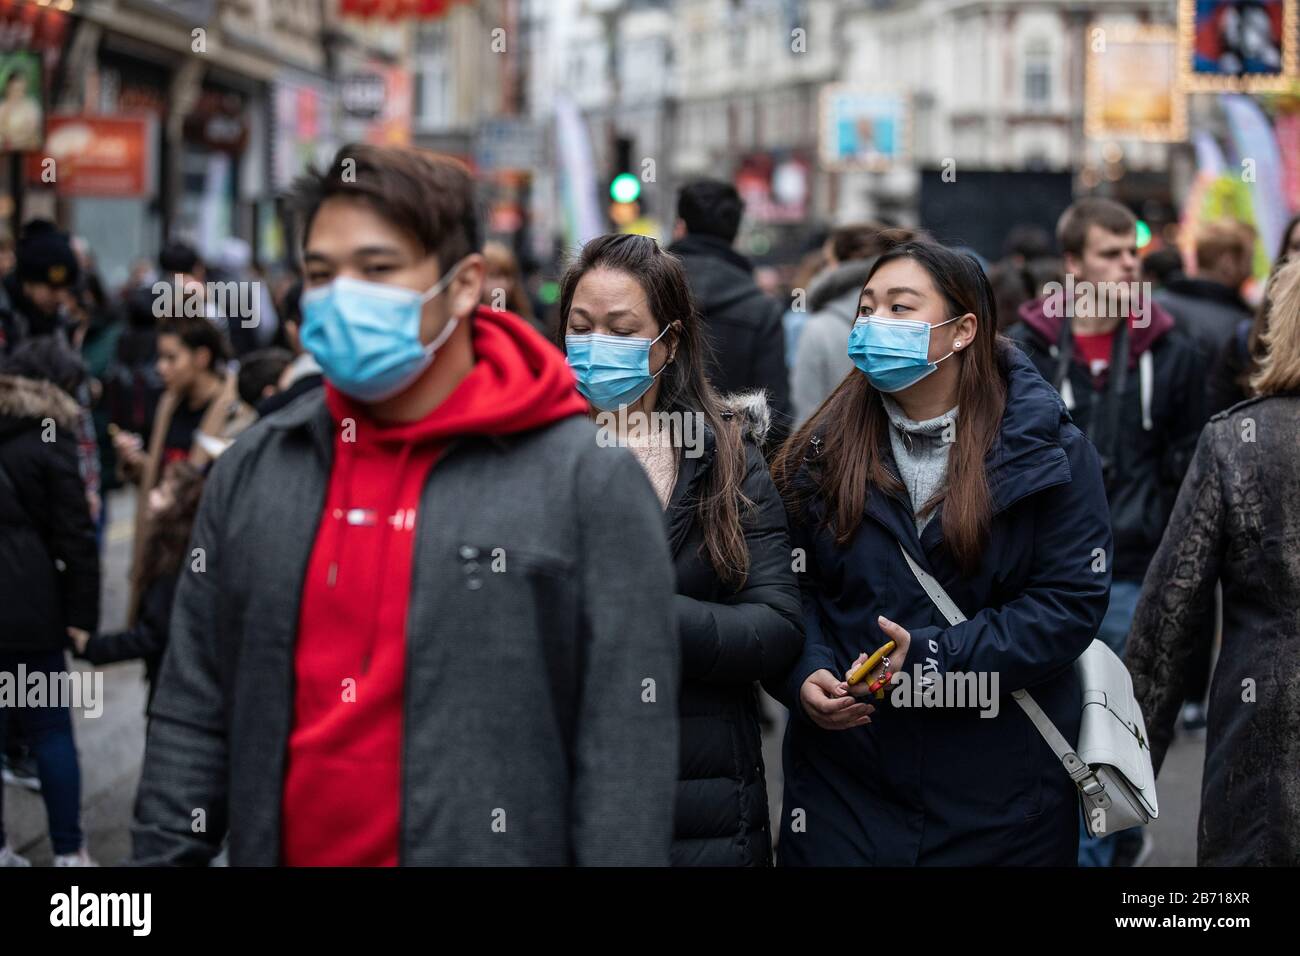 People wearing masks as precaution of catching Coronavirus at the Chinese New Year Celebration in London, Year of the Rat, Sunday 26th January 2020 UK Stock Photo